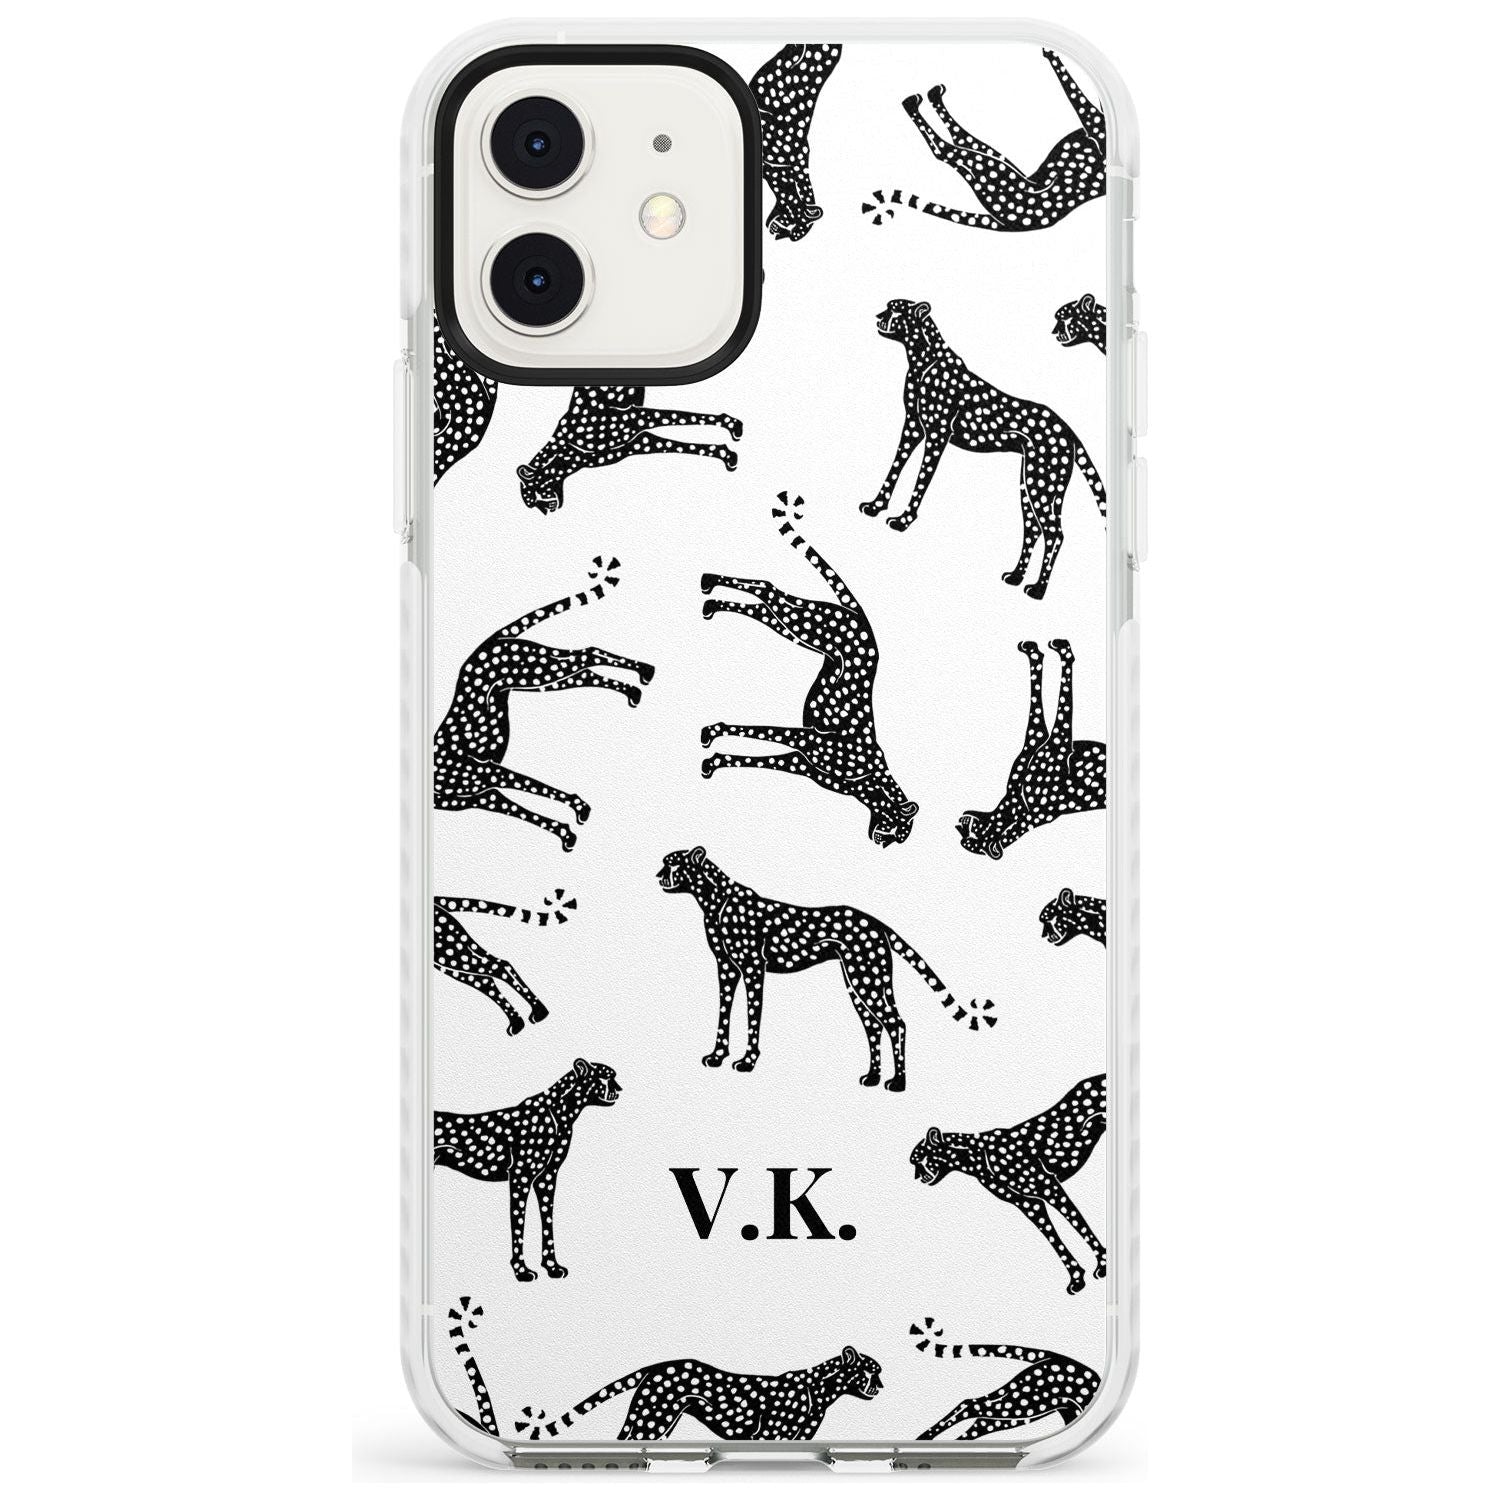 Personalised Cheetah Pattern: Black & White Slim TPU Phone Case for iPhone 11